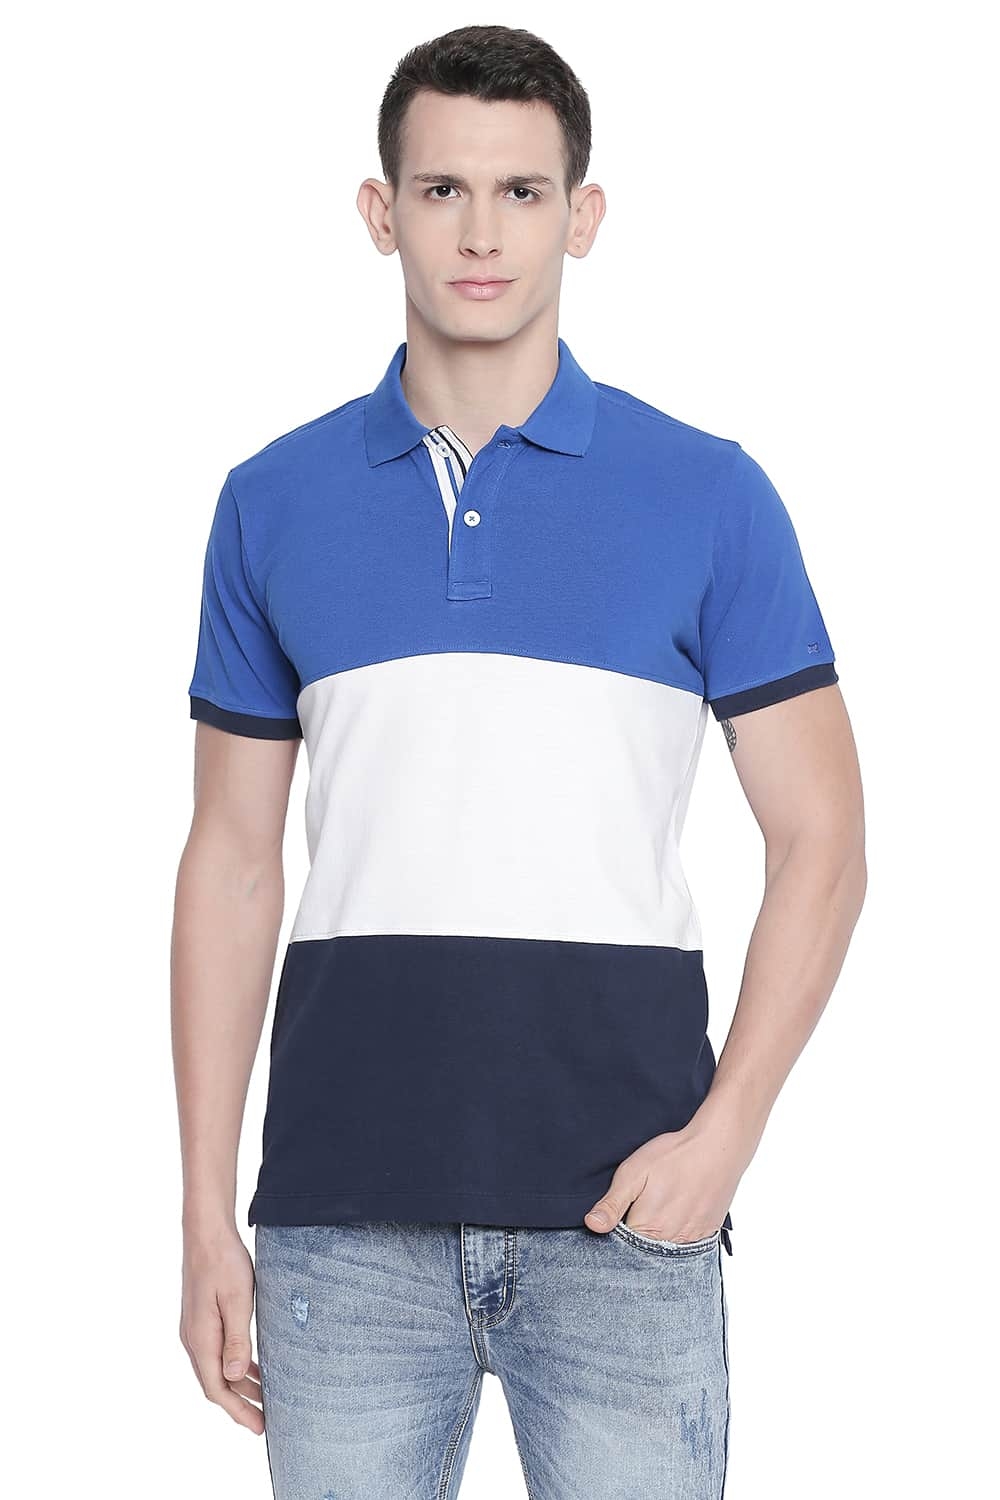 Basics | Basics Muscle Fit Nautical Blue Polo T Shirt